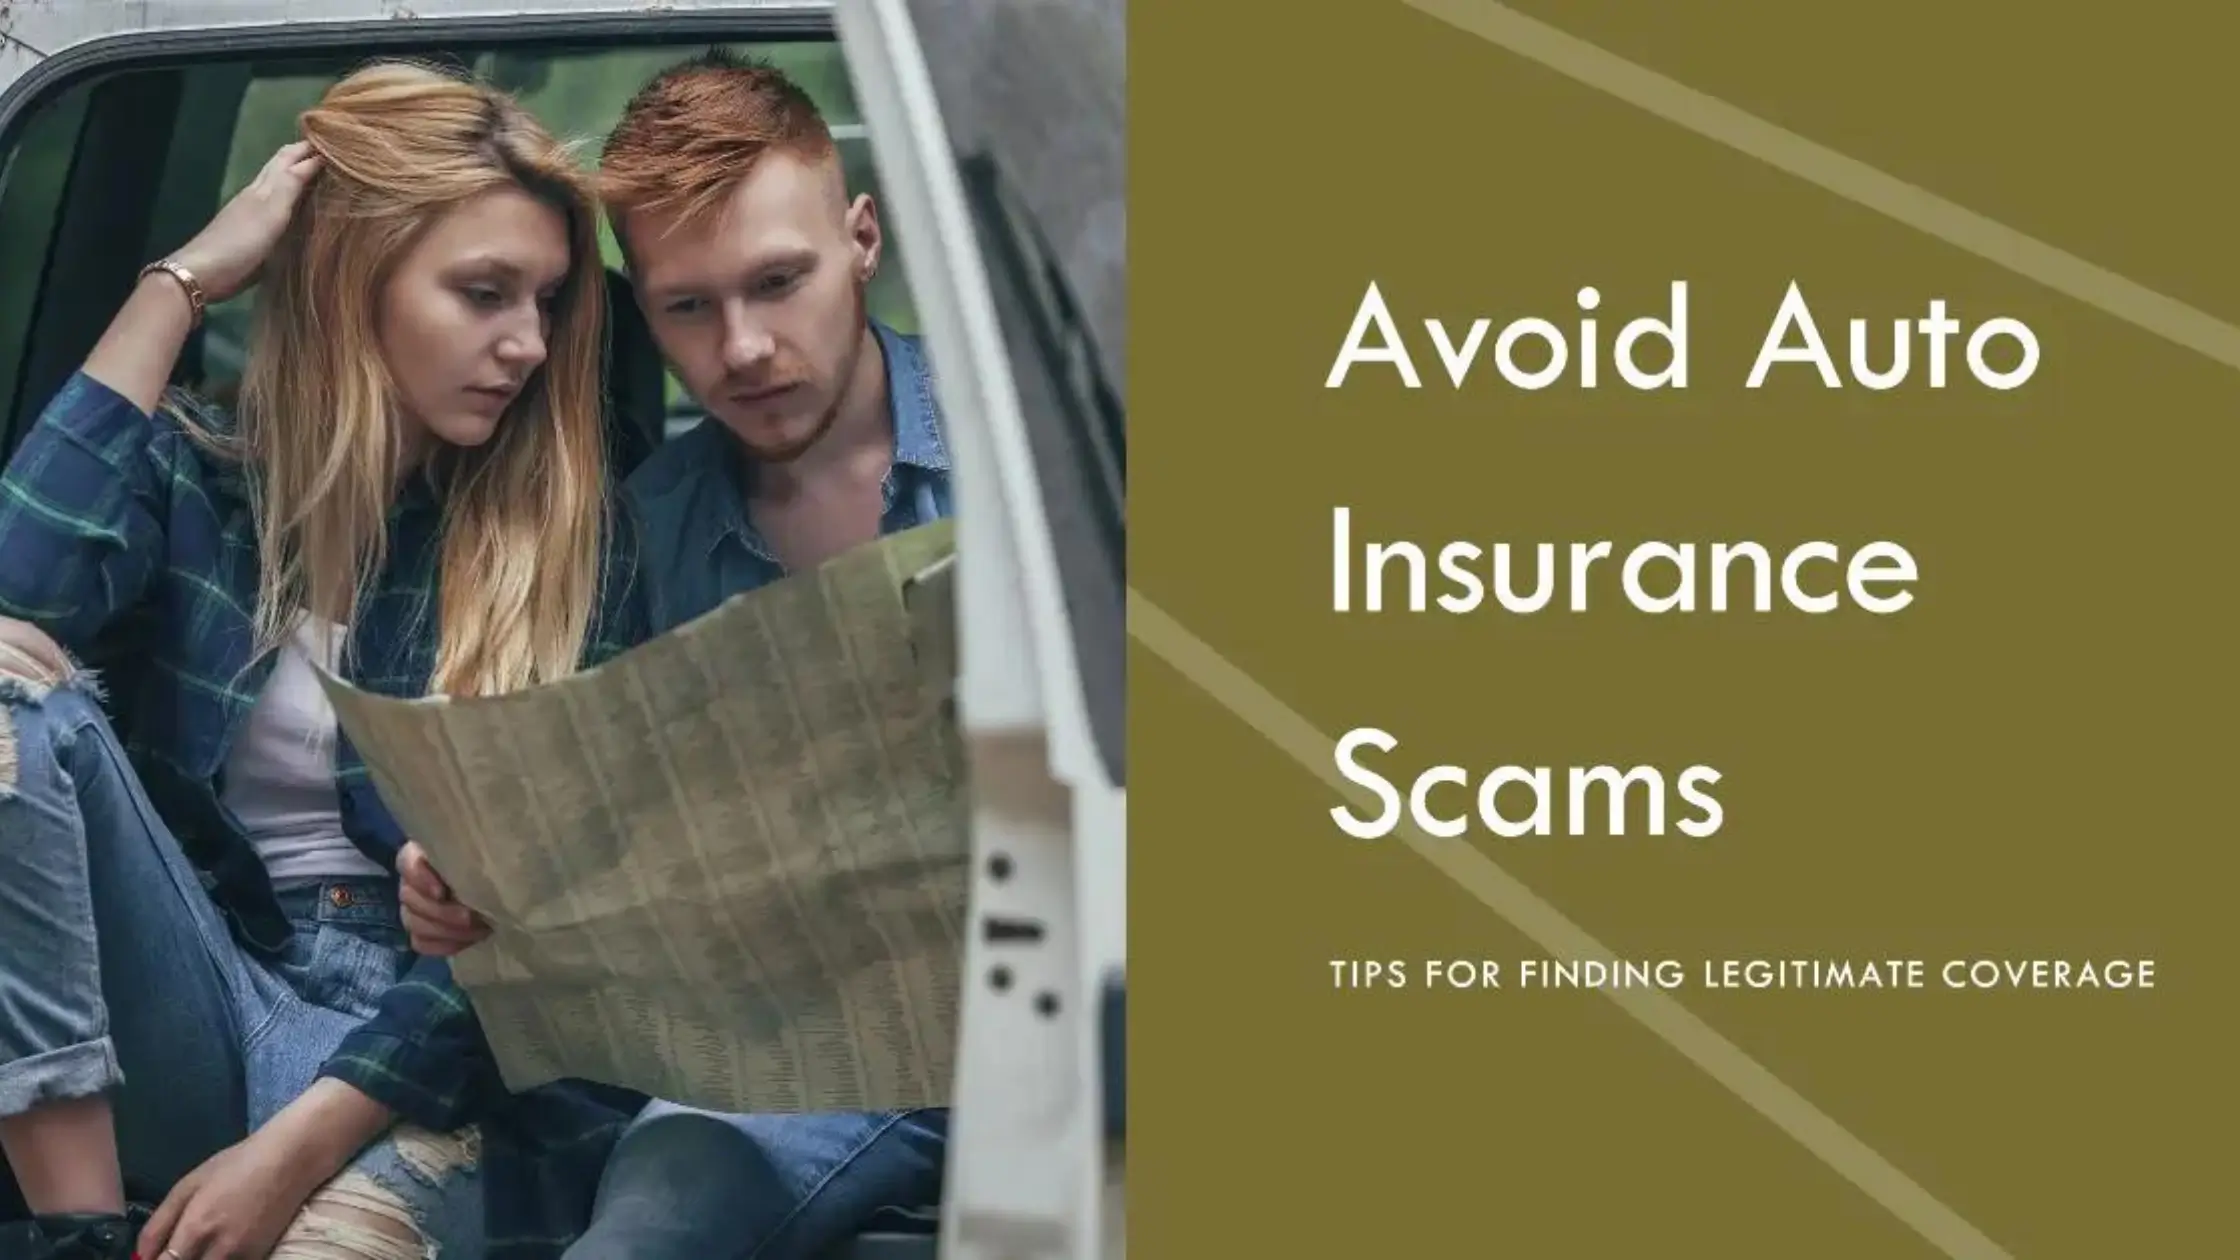 Auto insurance scams